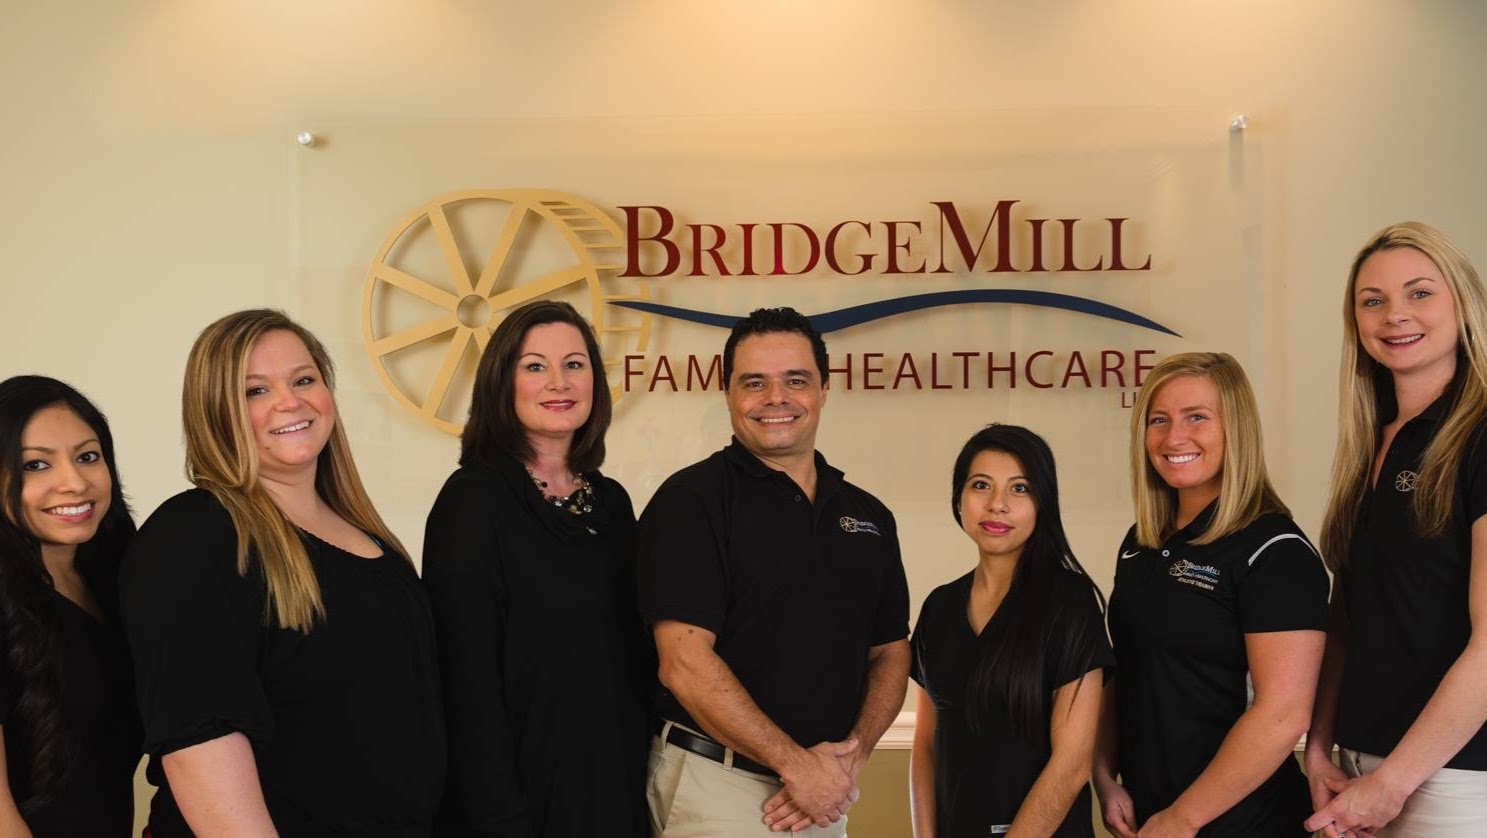 Bridgemill Family Healthcare